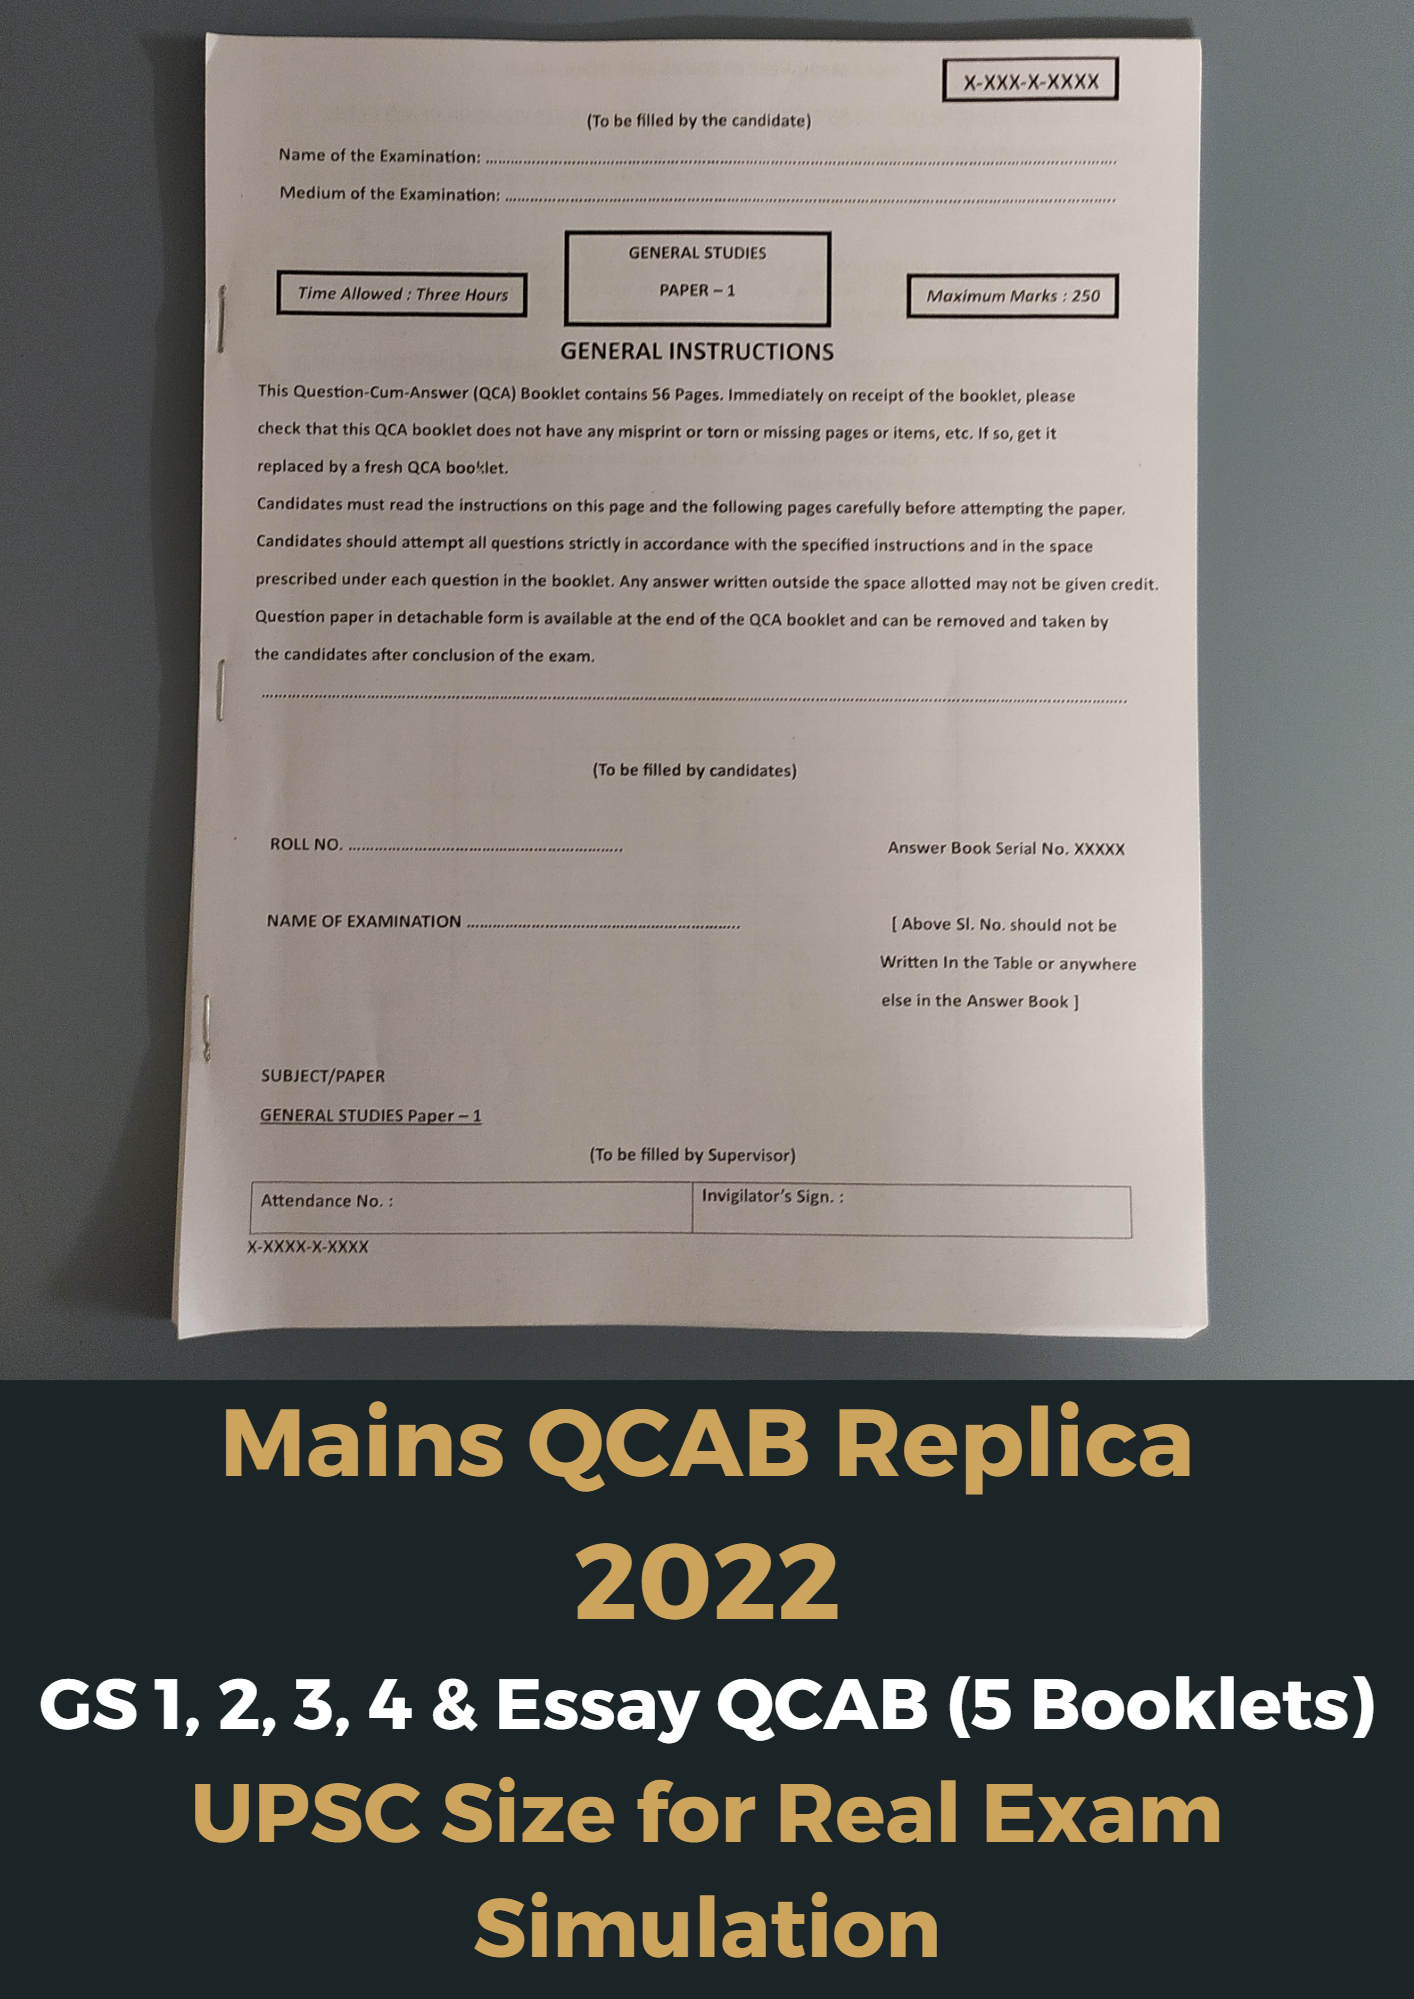 2022 Mains QCAB Replica - GS 1,2,3,4 & Essay (5 Booklets) - UPSC QCAB Size - For Real Exam Simulation